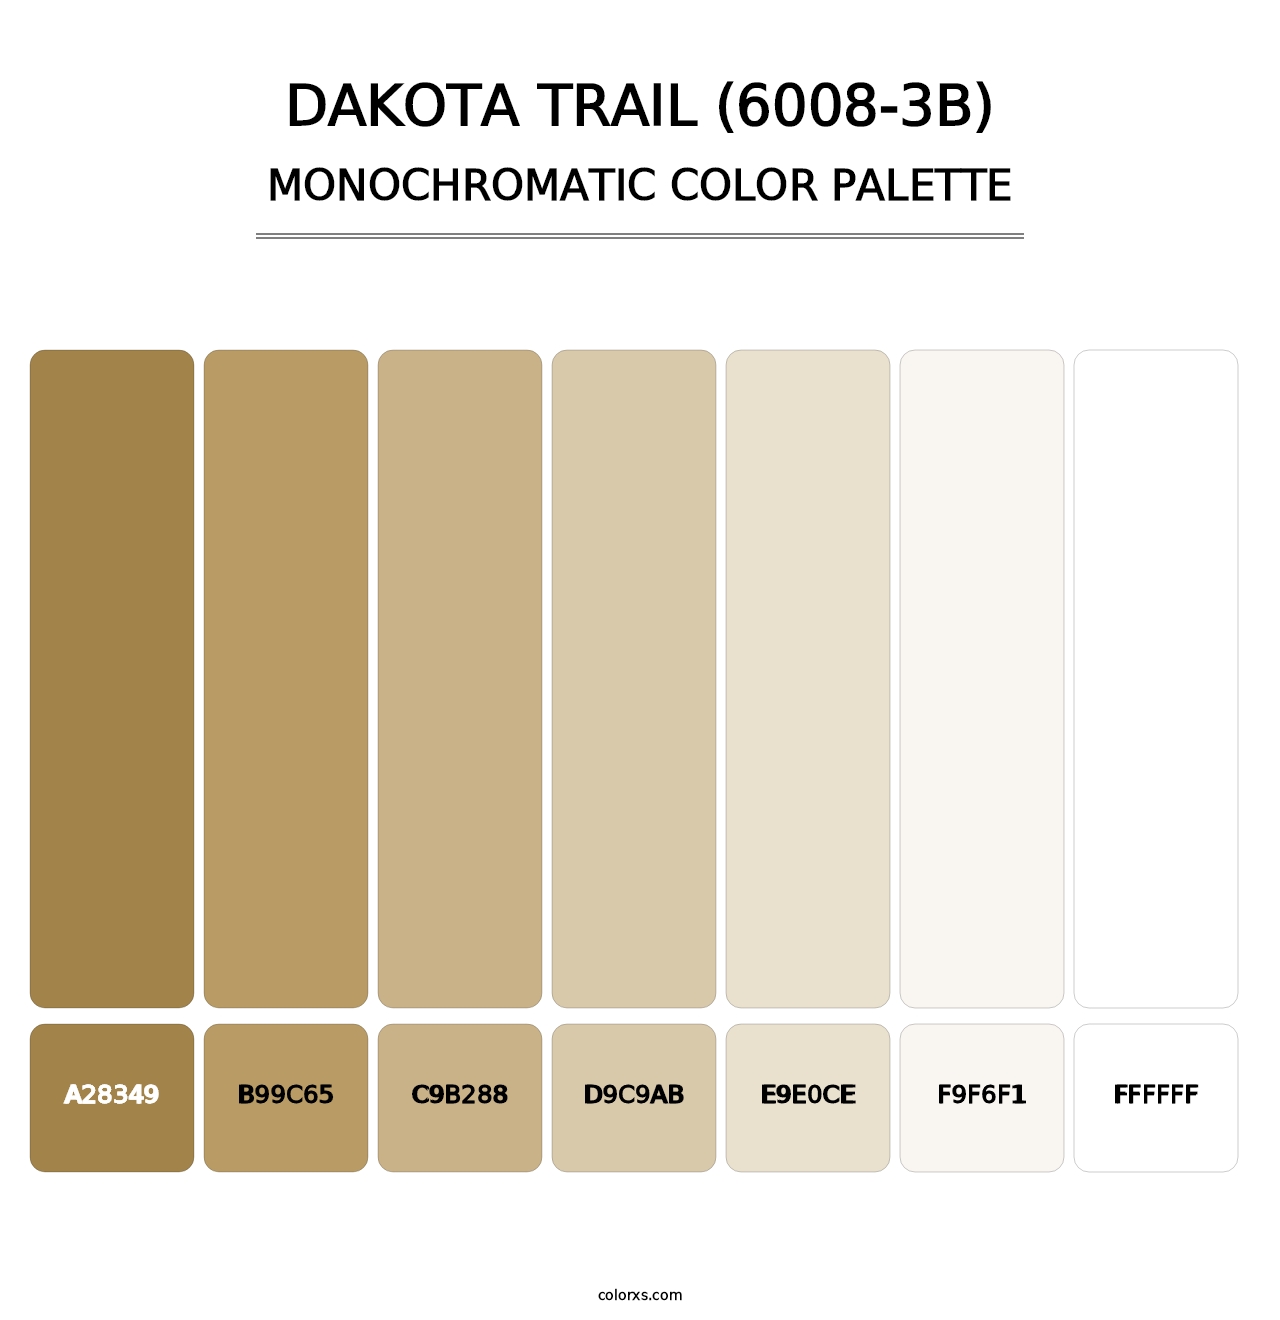 Dakota Trail (6008-3B) - Monochromatic Color Palette